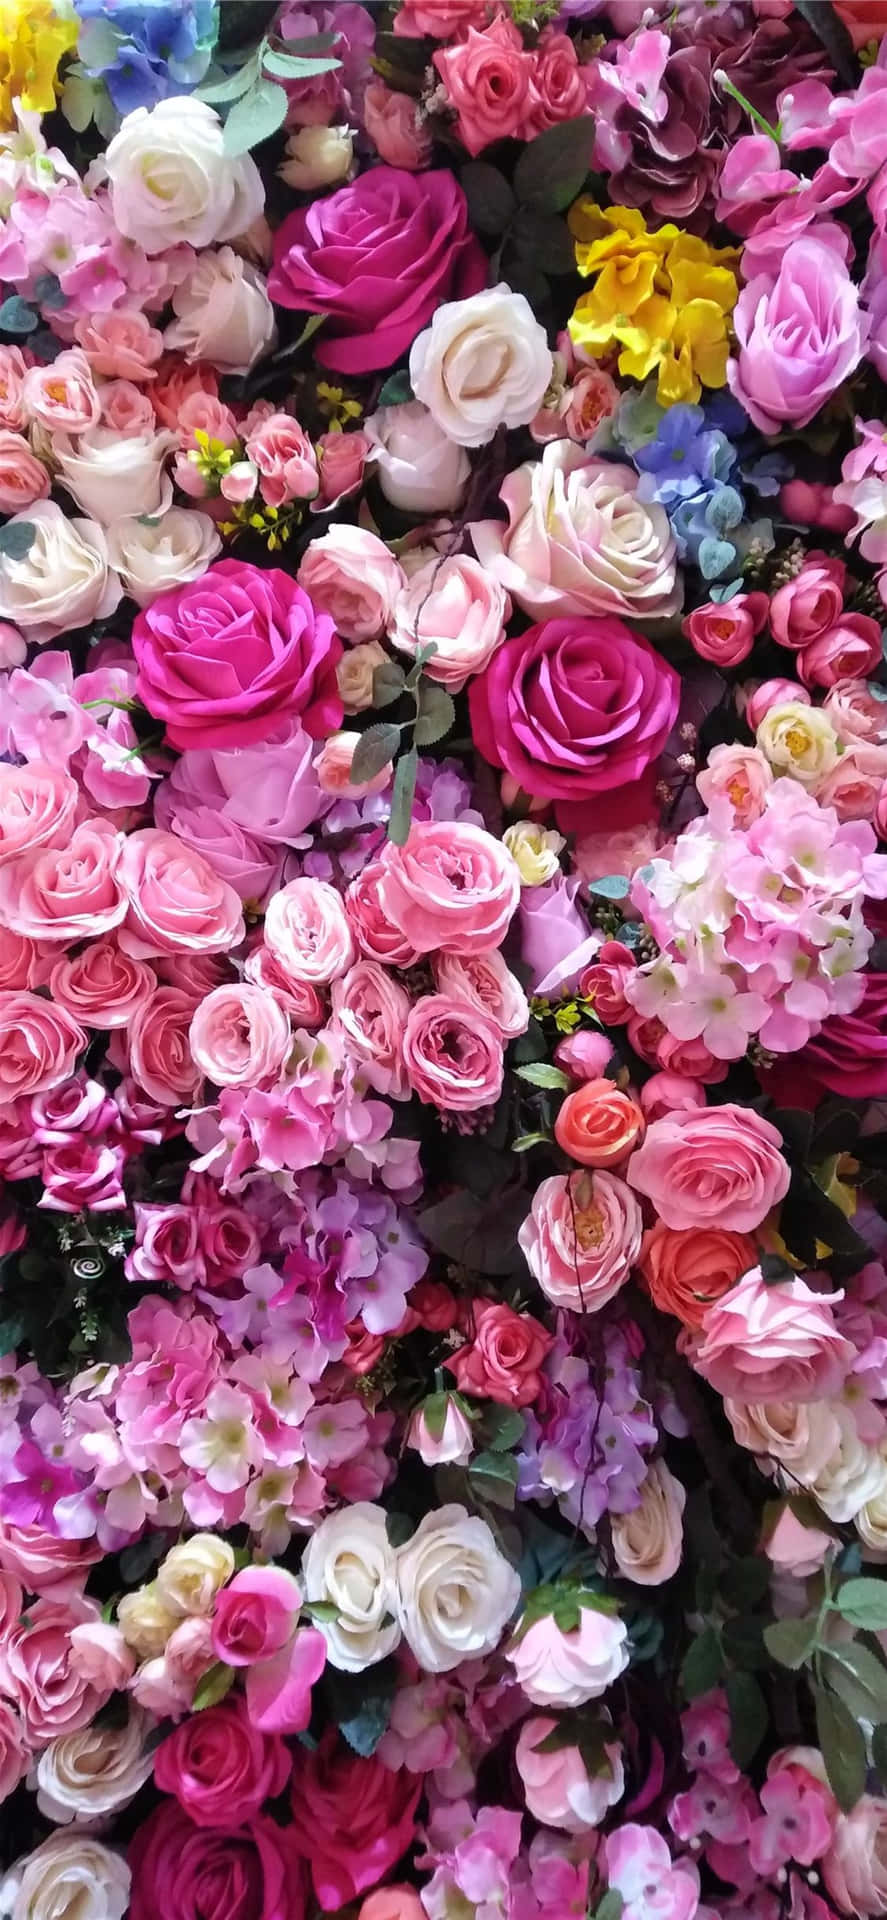 "elegant Eternity Roses In Full Bloom"